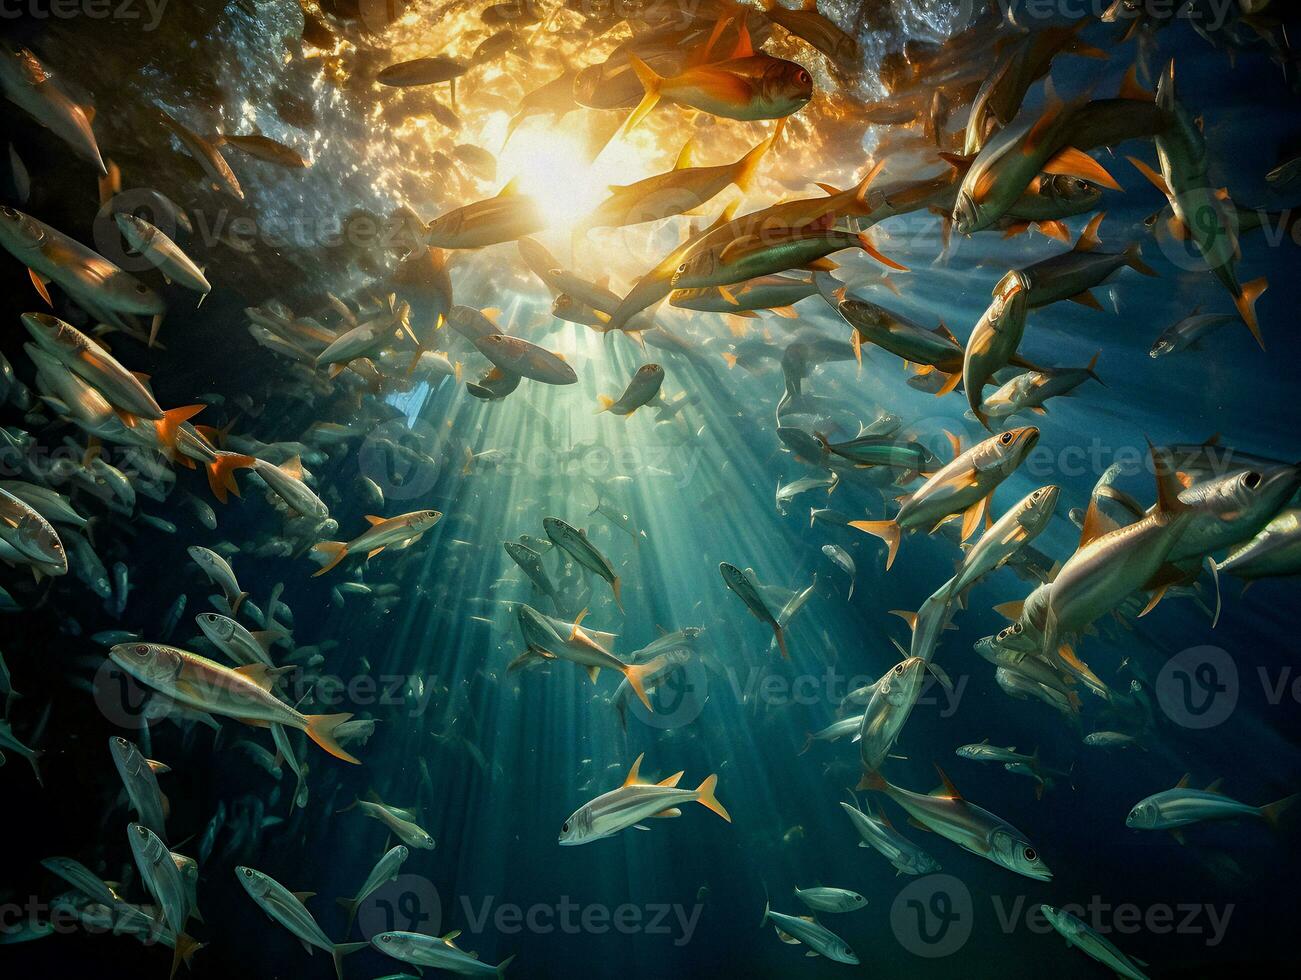 Underwater View of Fishes with Stunning Illumination - Generative AI Art photo